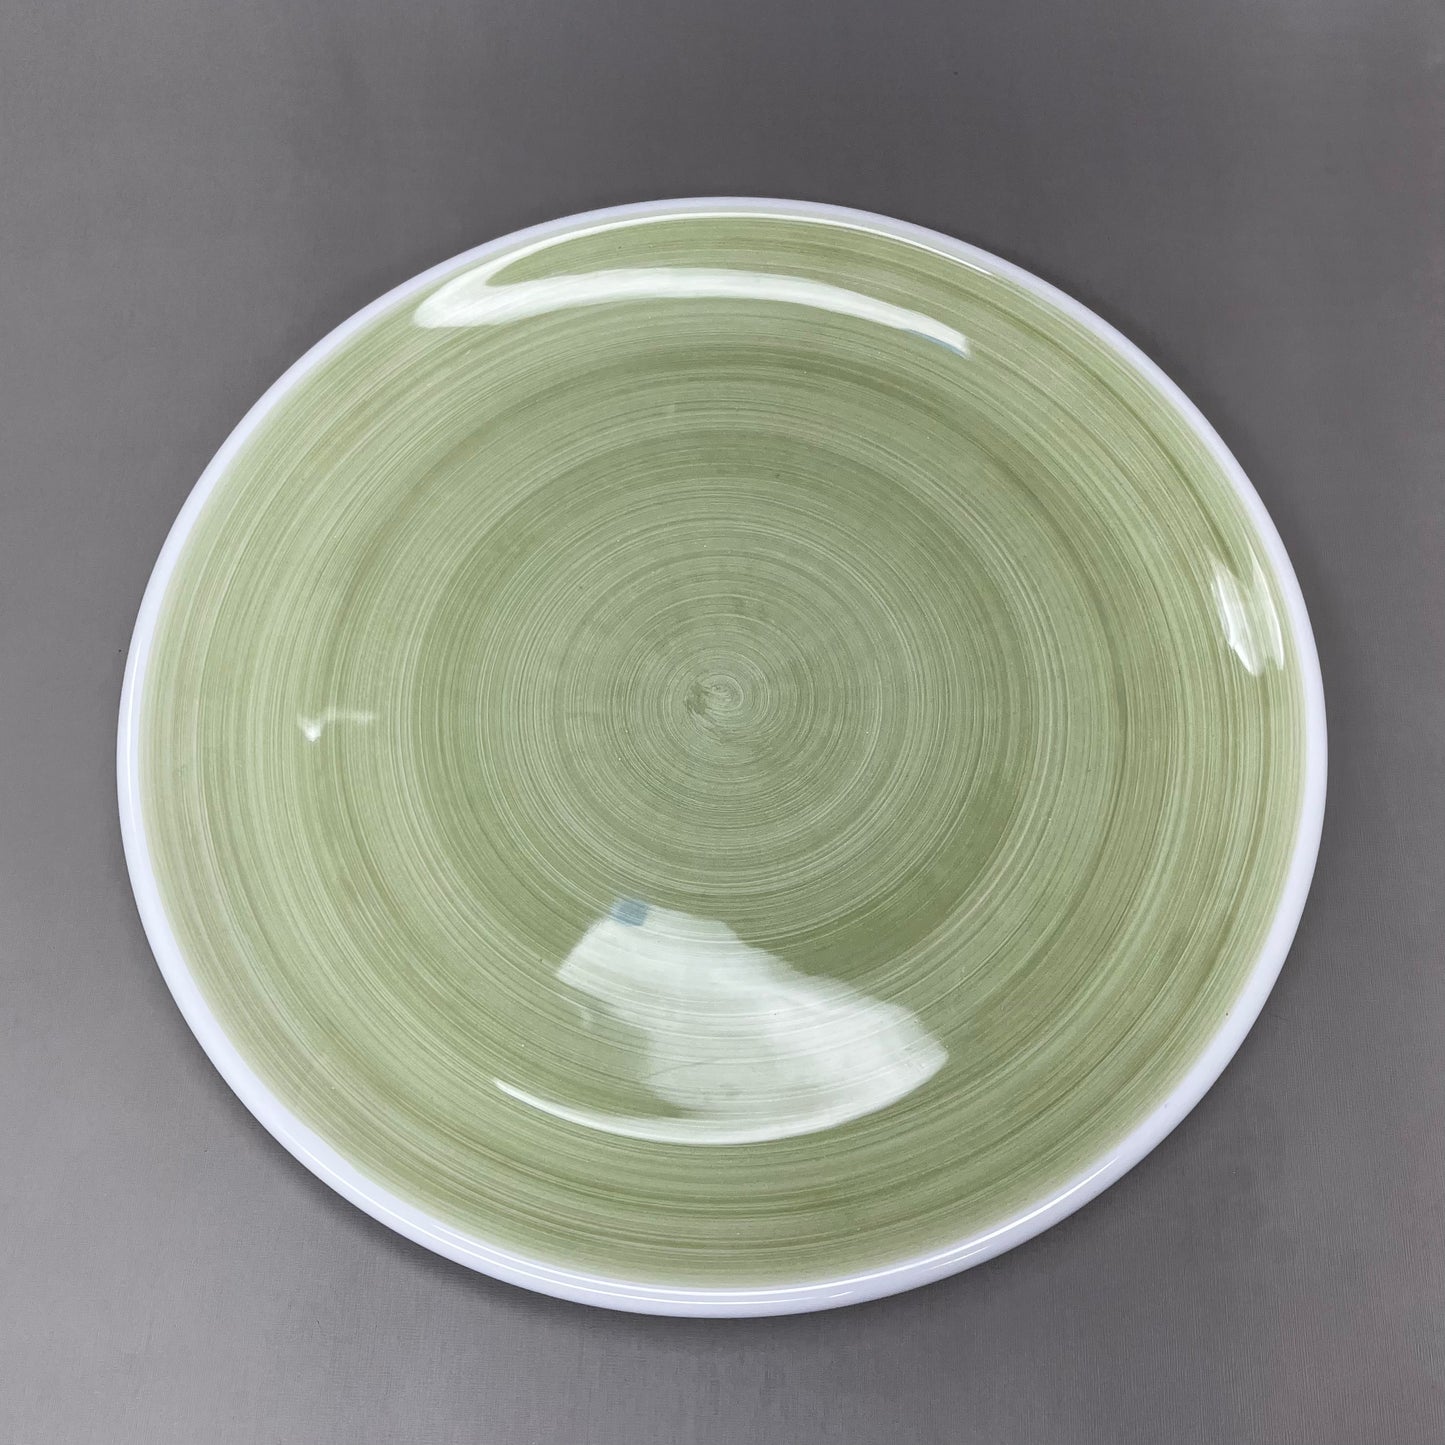 SUMMERHILL & BISHOP LOT OF 2! Ceramic Dinner Plate Season Green, 11.5 in Diam. (New)